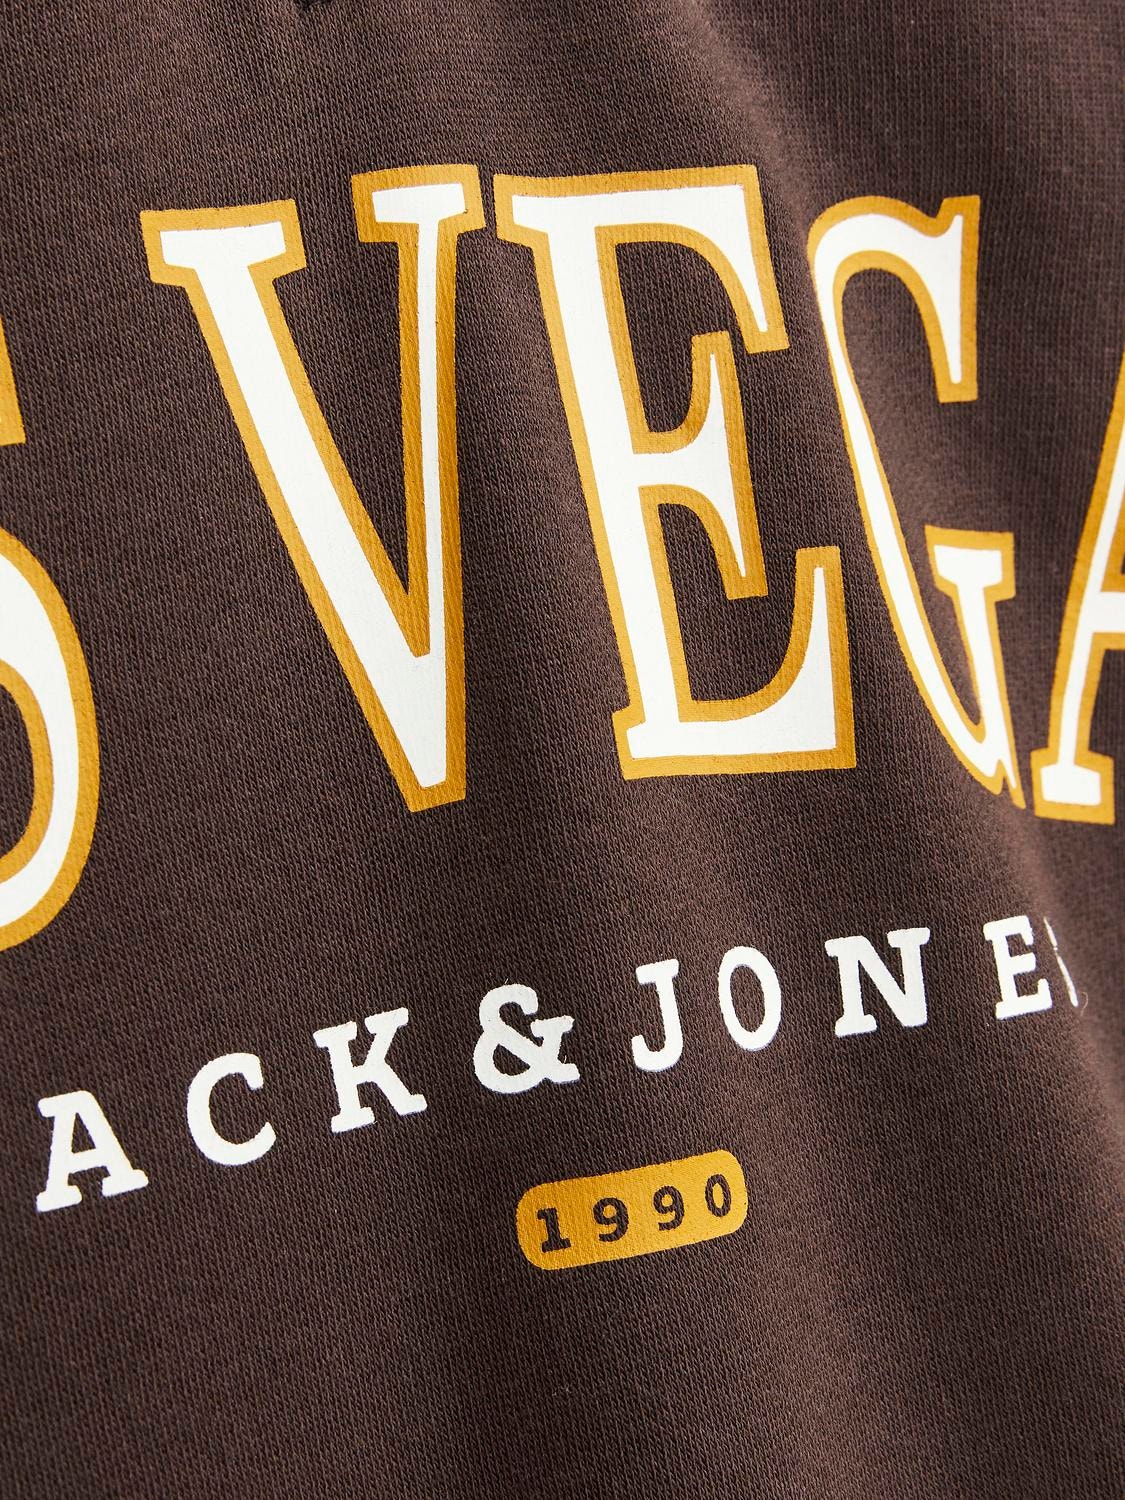 Jack & Jones Printed Half Zip Sweatshirt -Seal Brown - 12257392